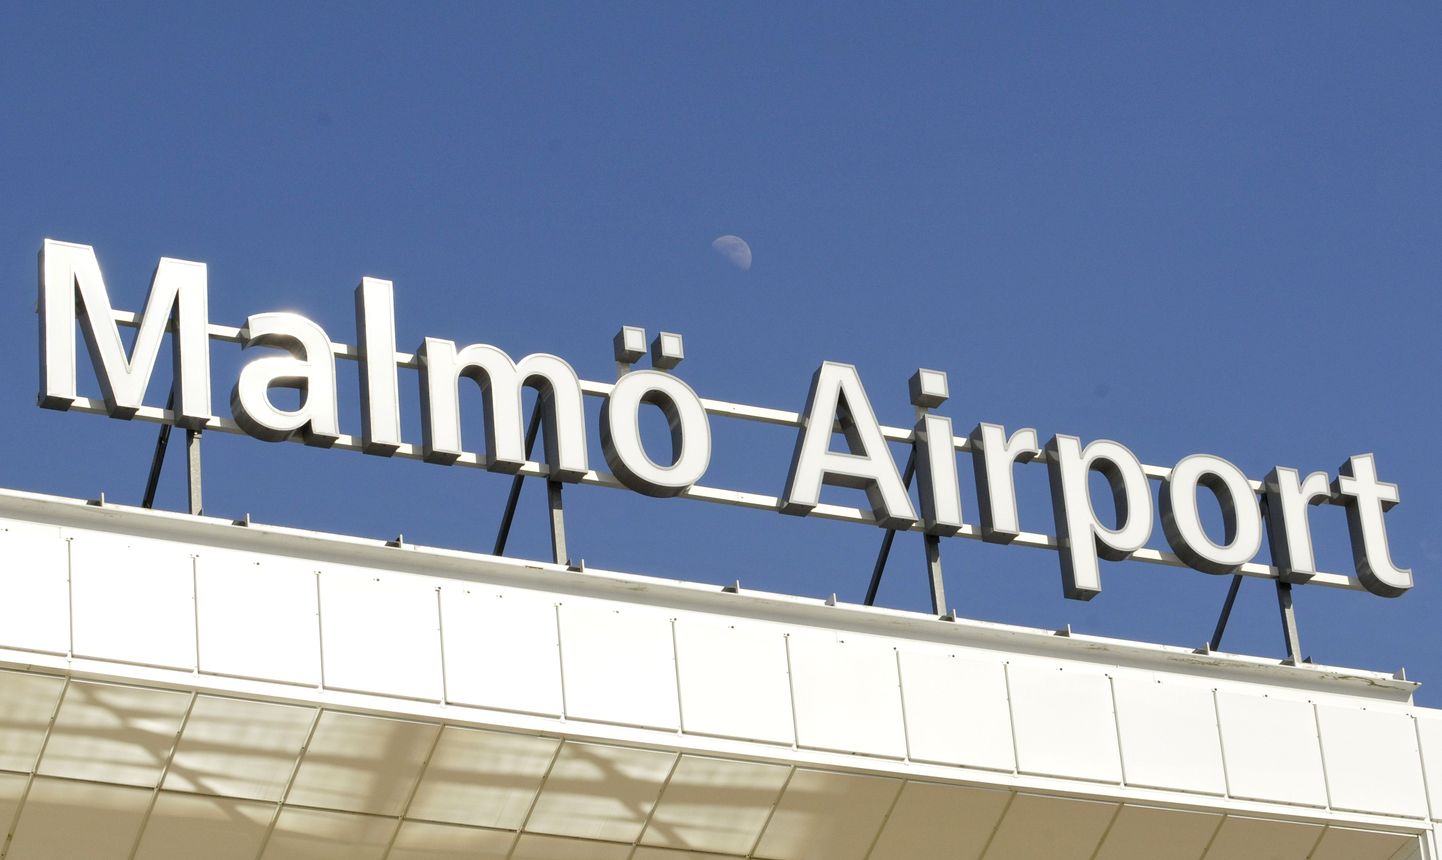 Malmö lennujaamas peeti kinni Bosnialasest džihadist.